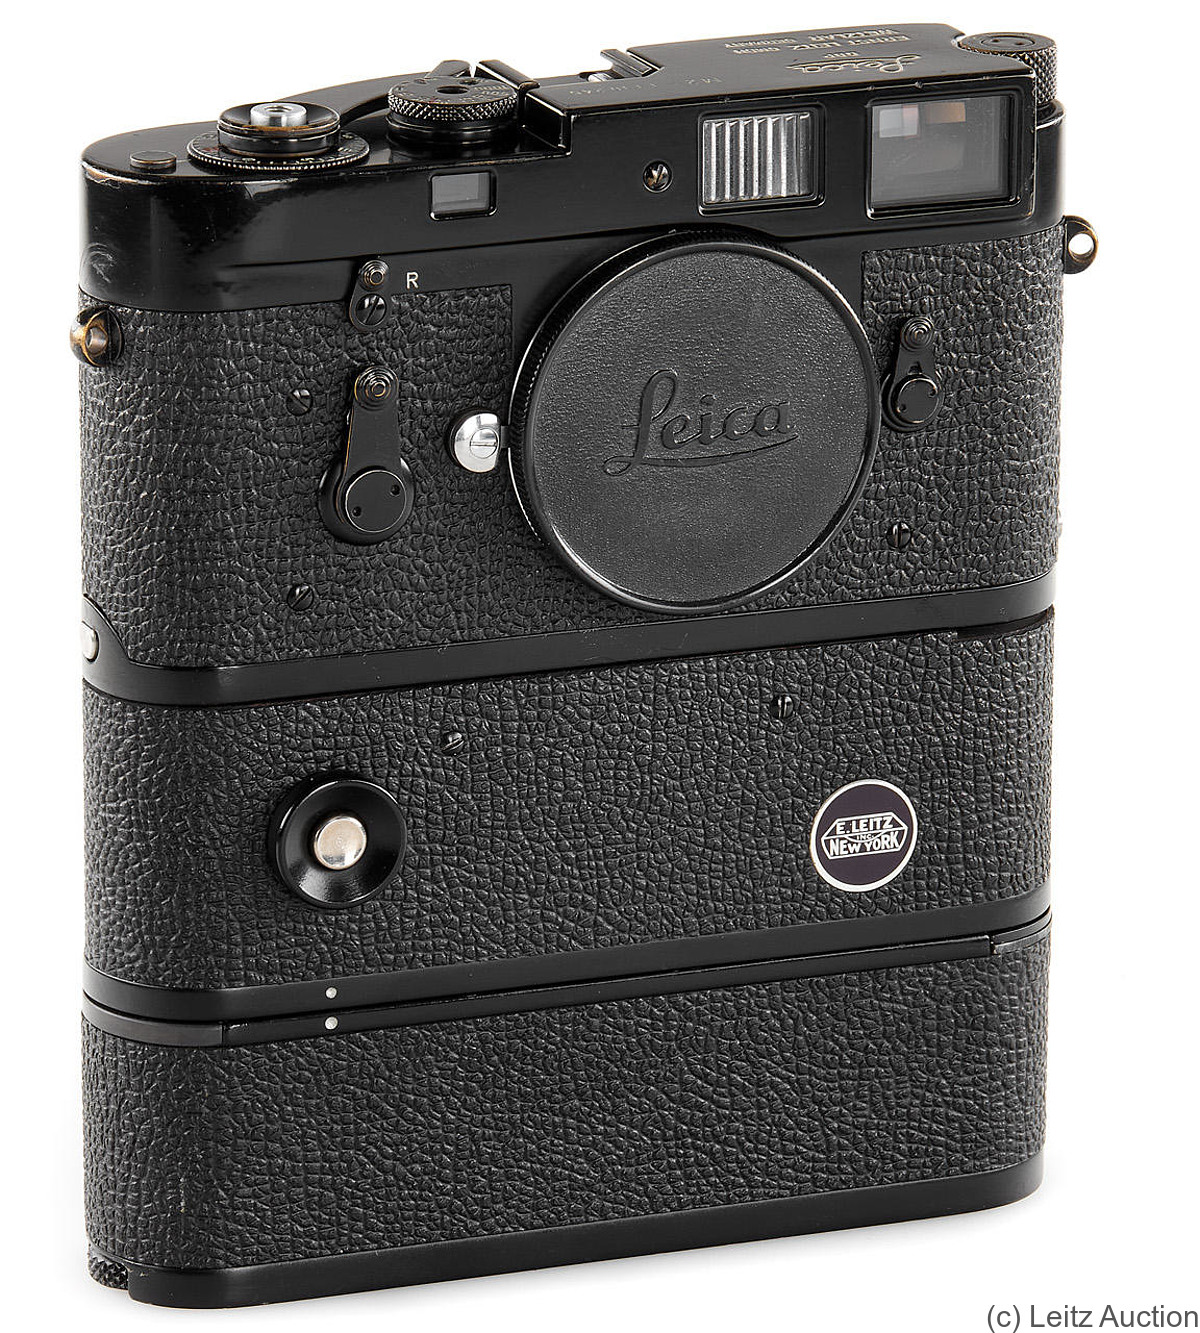 Leitz: Leica M2 New York Motor (black) camera